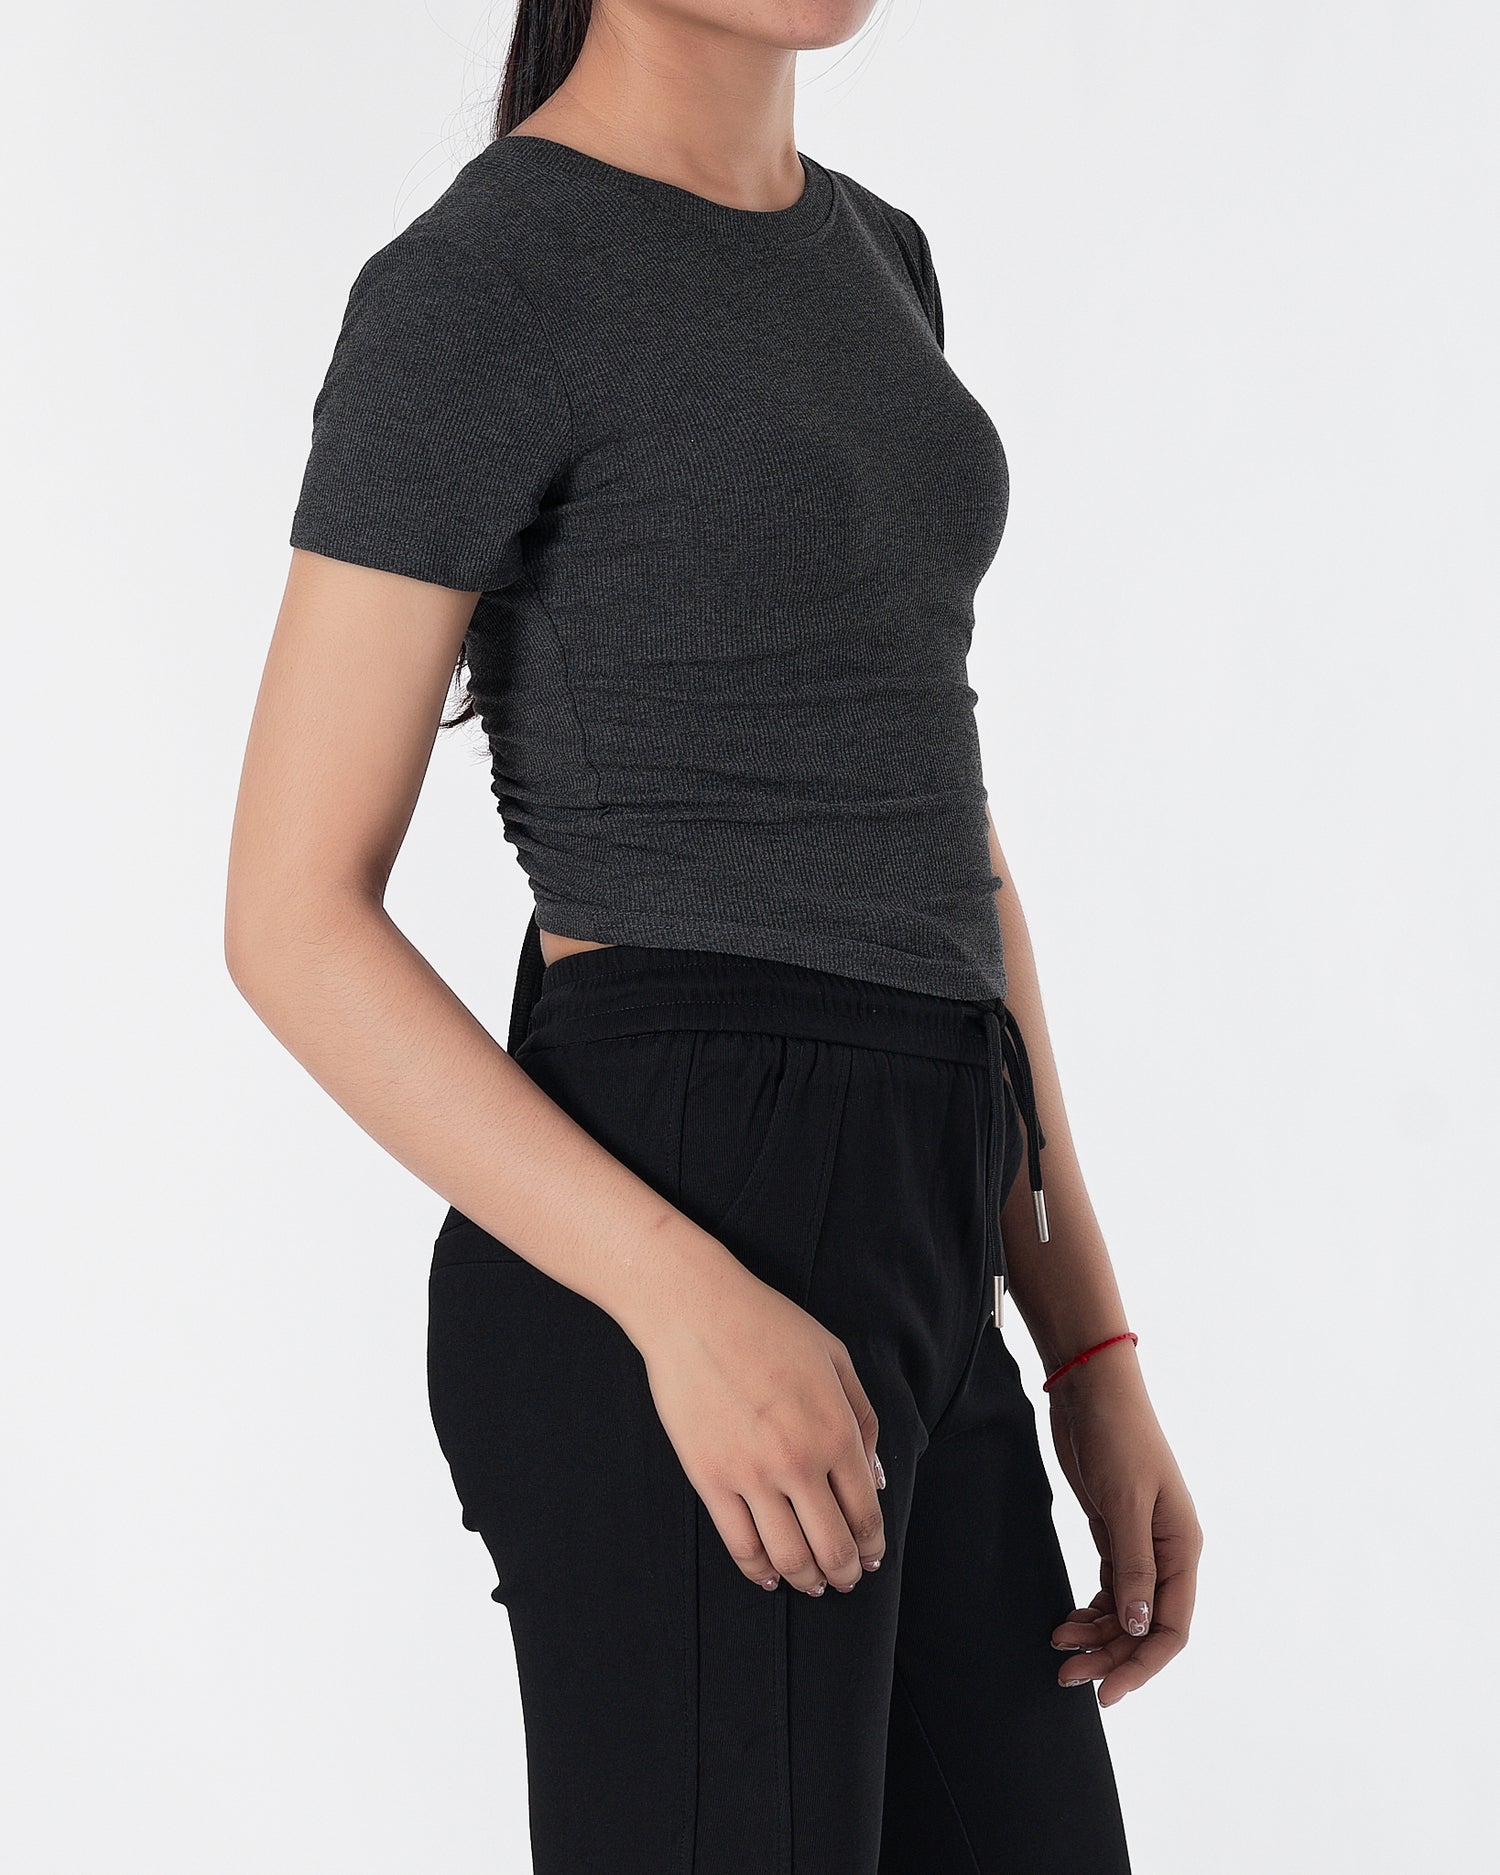 Plain Color Side String  Lady Black T-Shirt 10.90